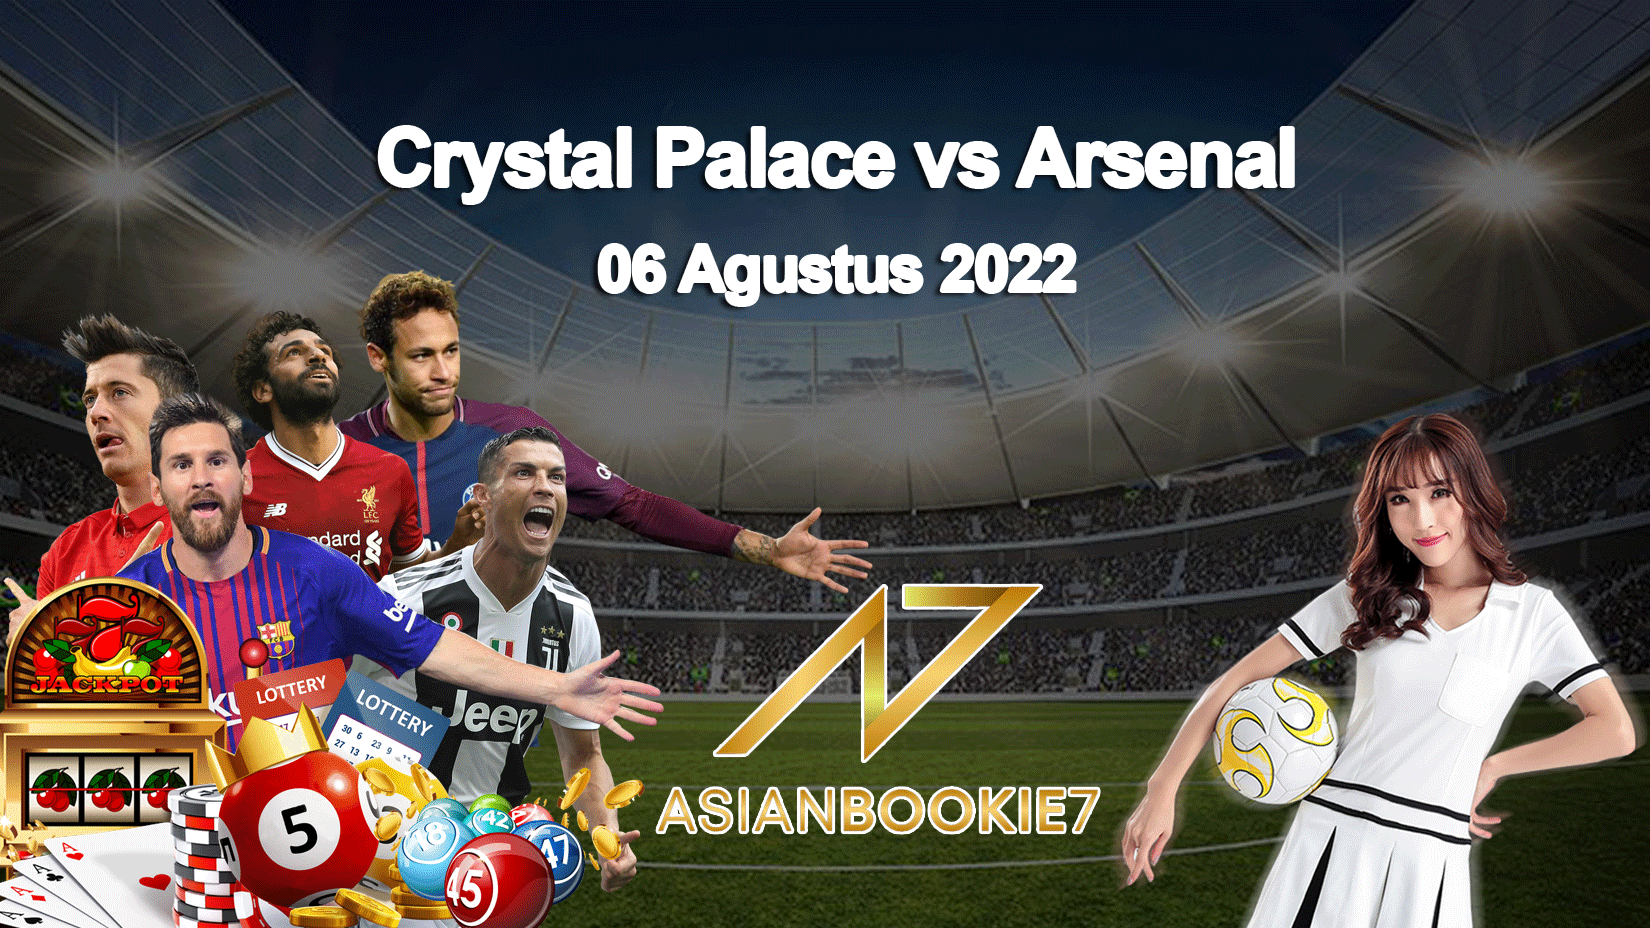 Prediksi-Crystal-Palace-vs-Arsenal-06-Agustus-2022